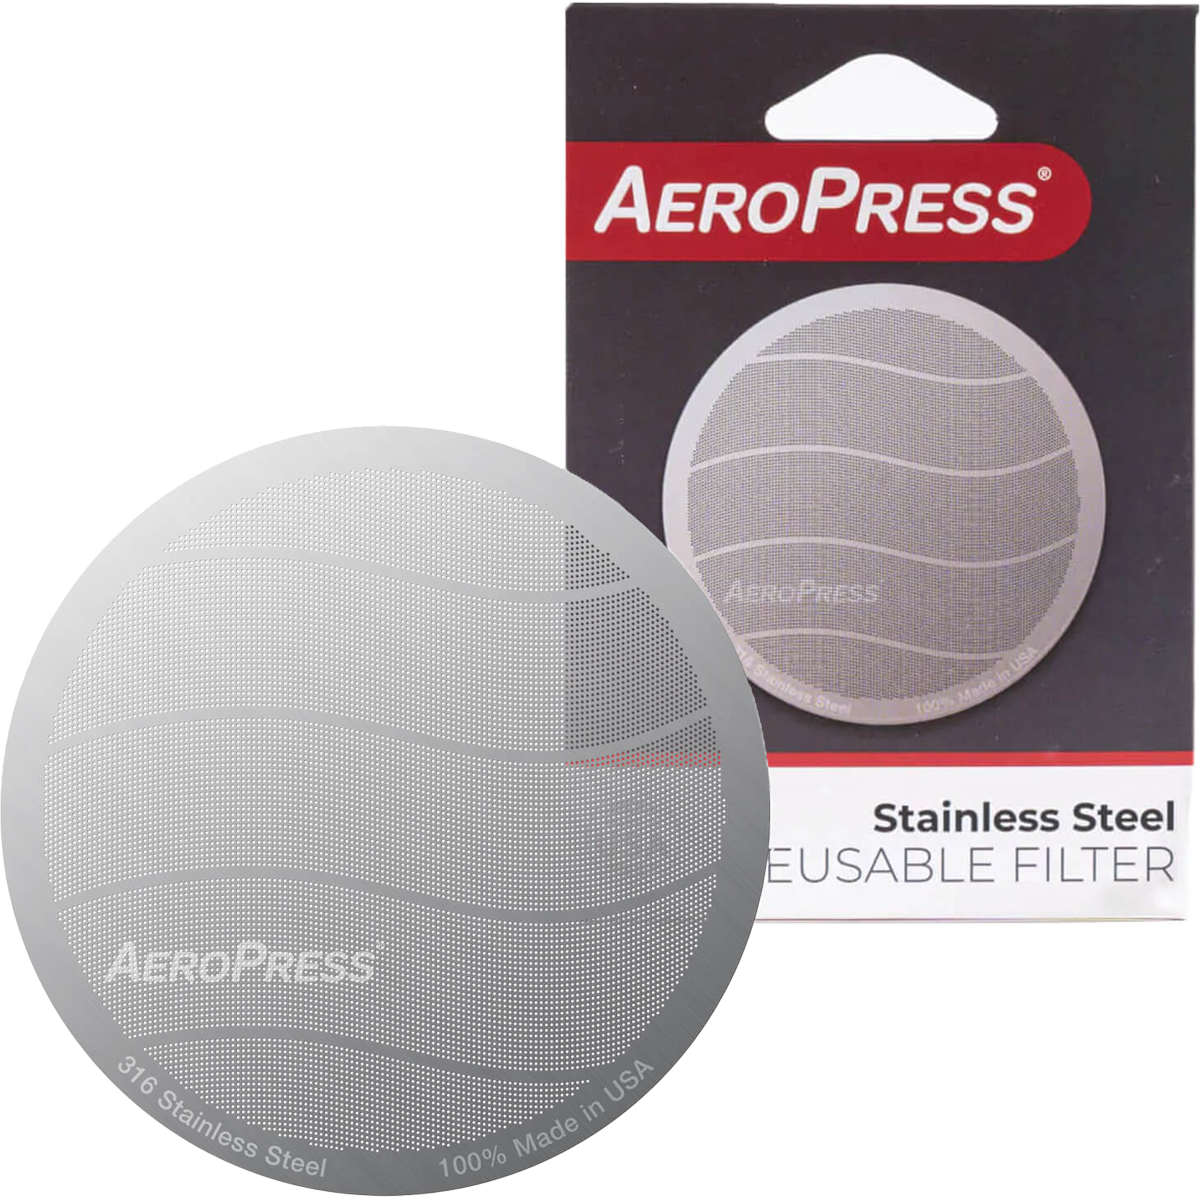 AeroPress Stainless Steel Filter alternate view